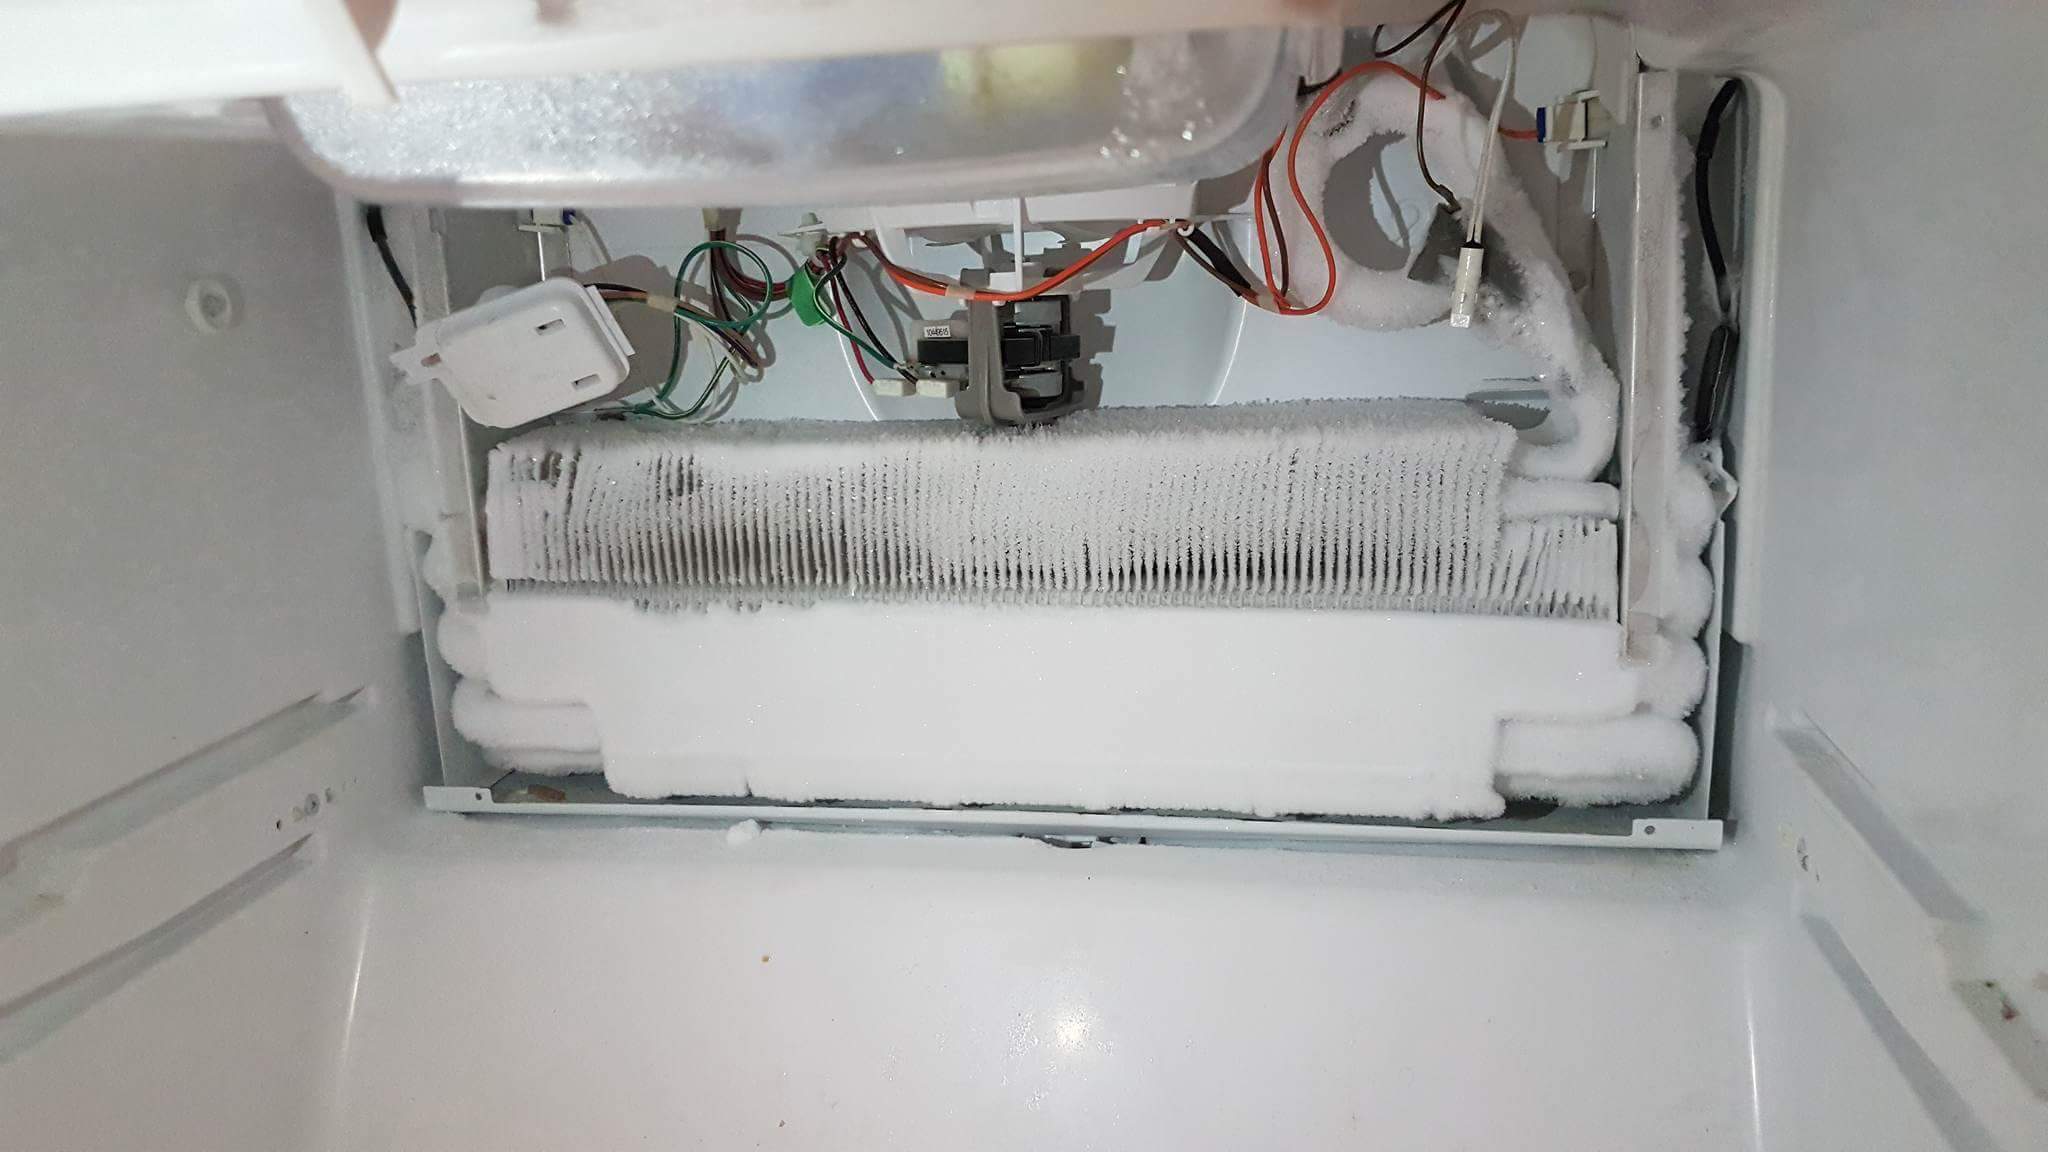 Appliance Repair Service in Toronto 🛠️ I-Fix Appliance Repair